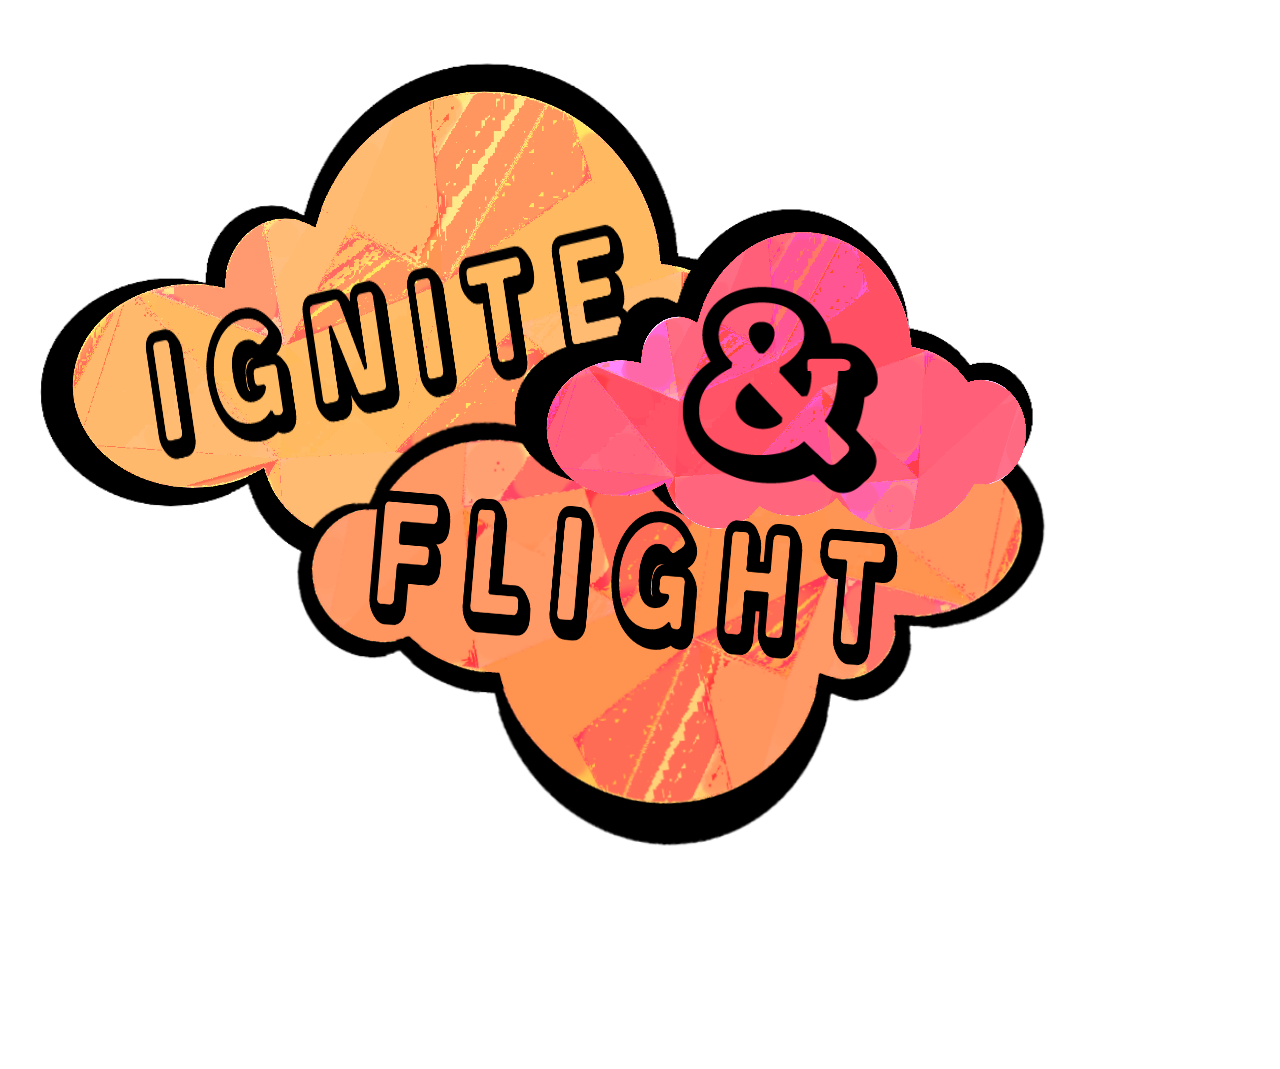 Ignite & Flight